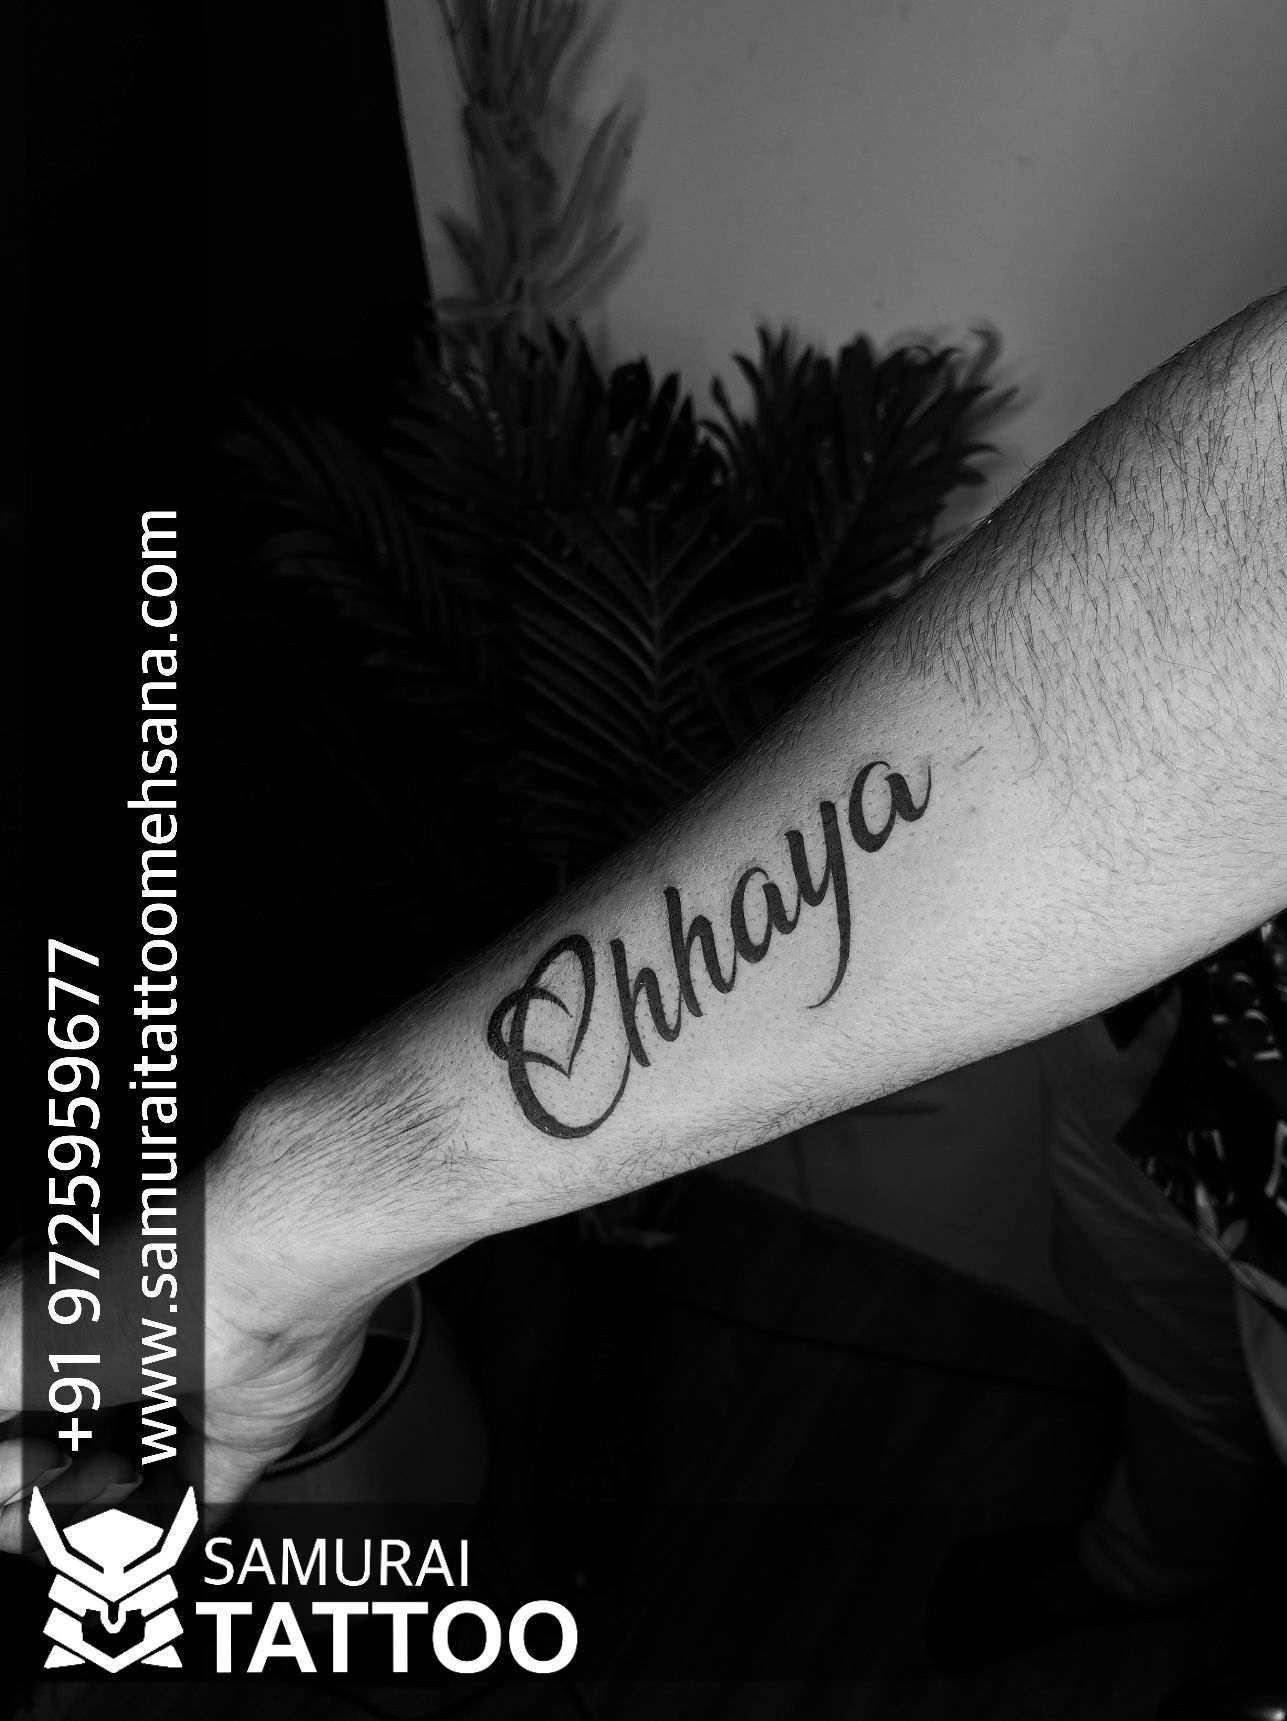 Download Vishal Name Tattoo Designs - Graciaviva.cat | Name tattoo designs,  Name tattoo, Name wallpaper